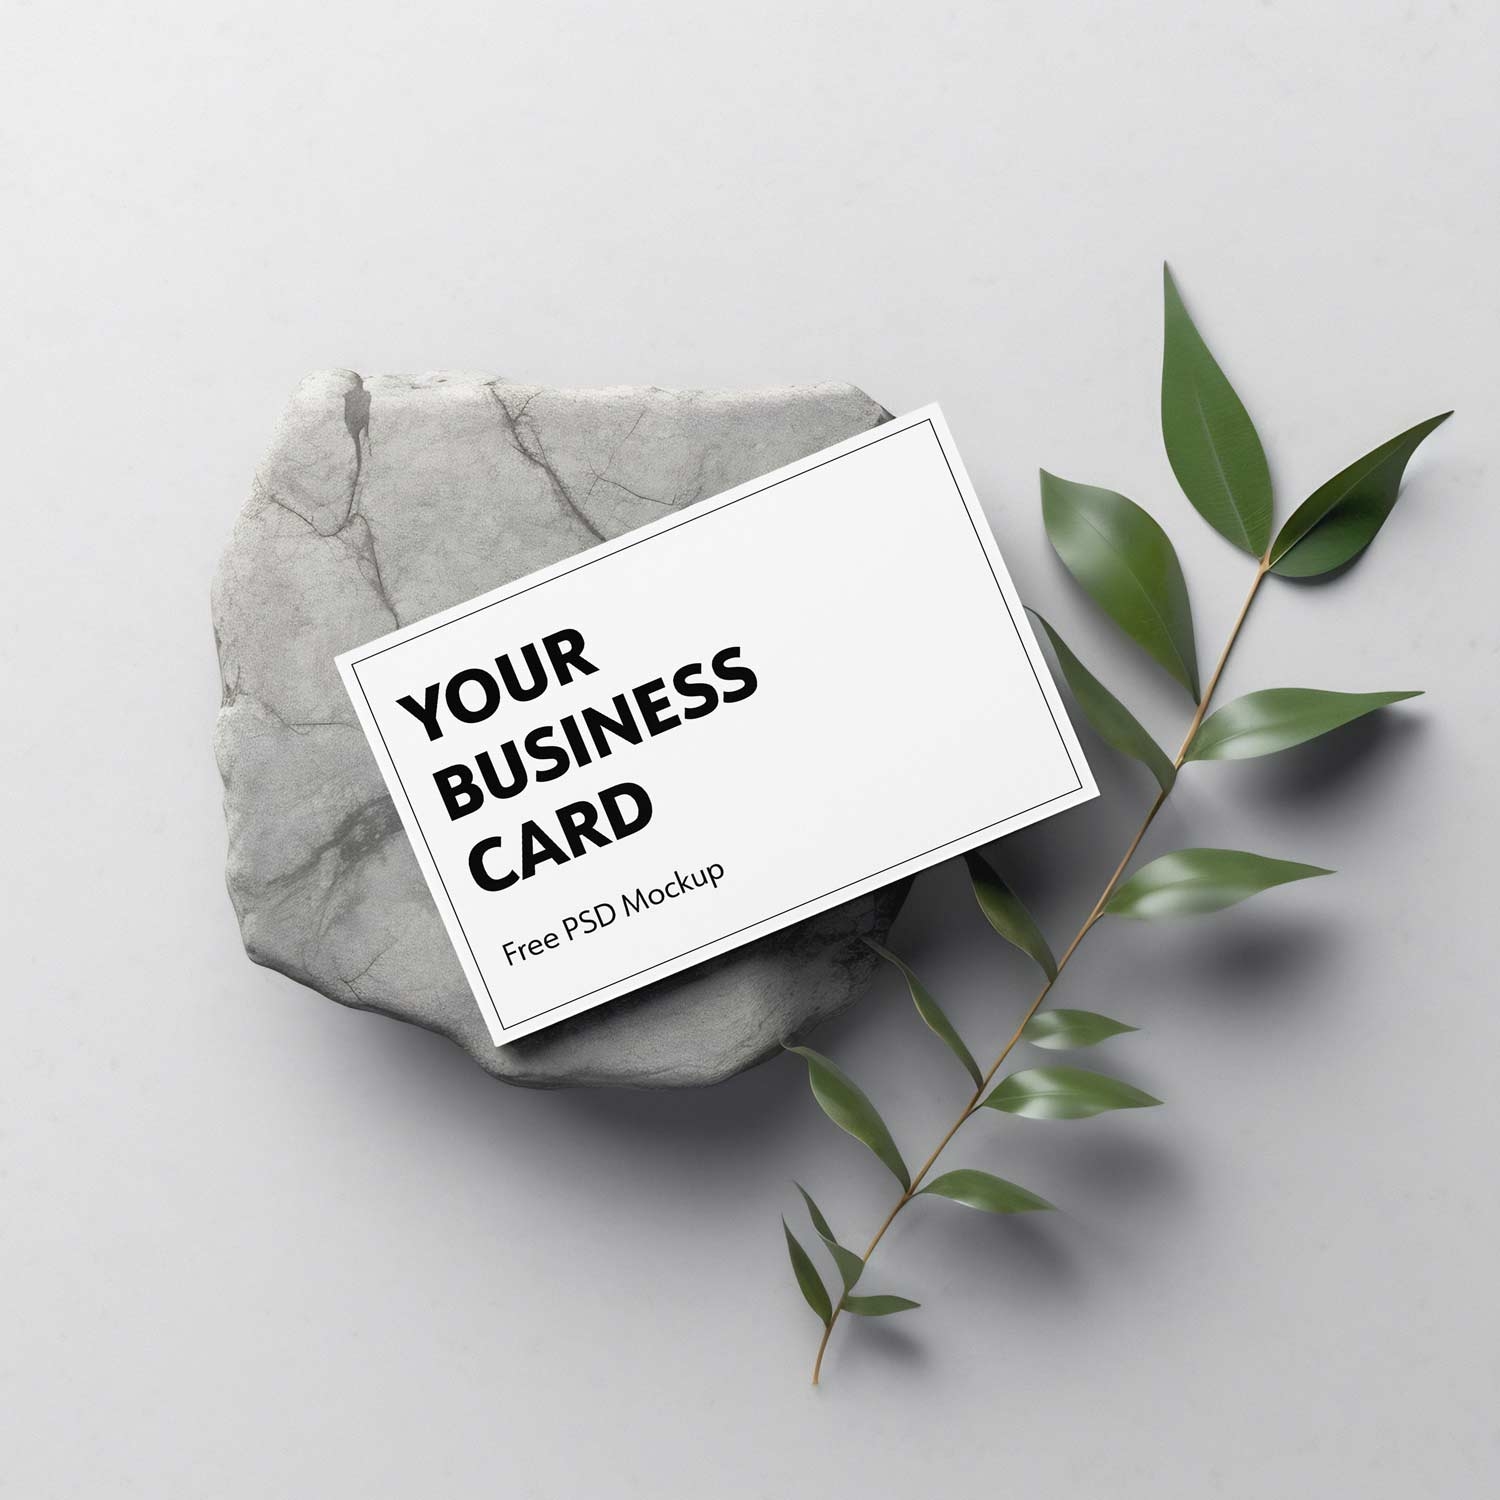 Free Business Card on stone Mockup